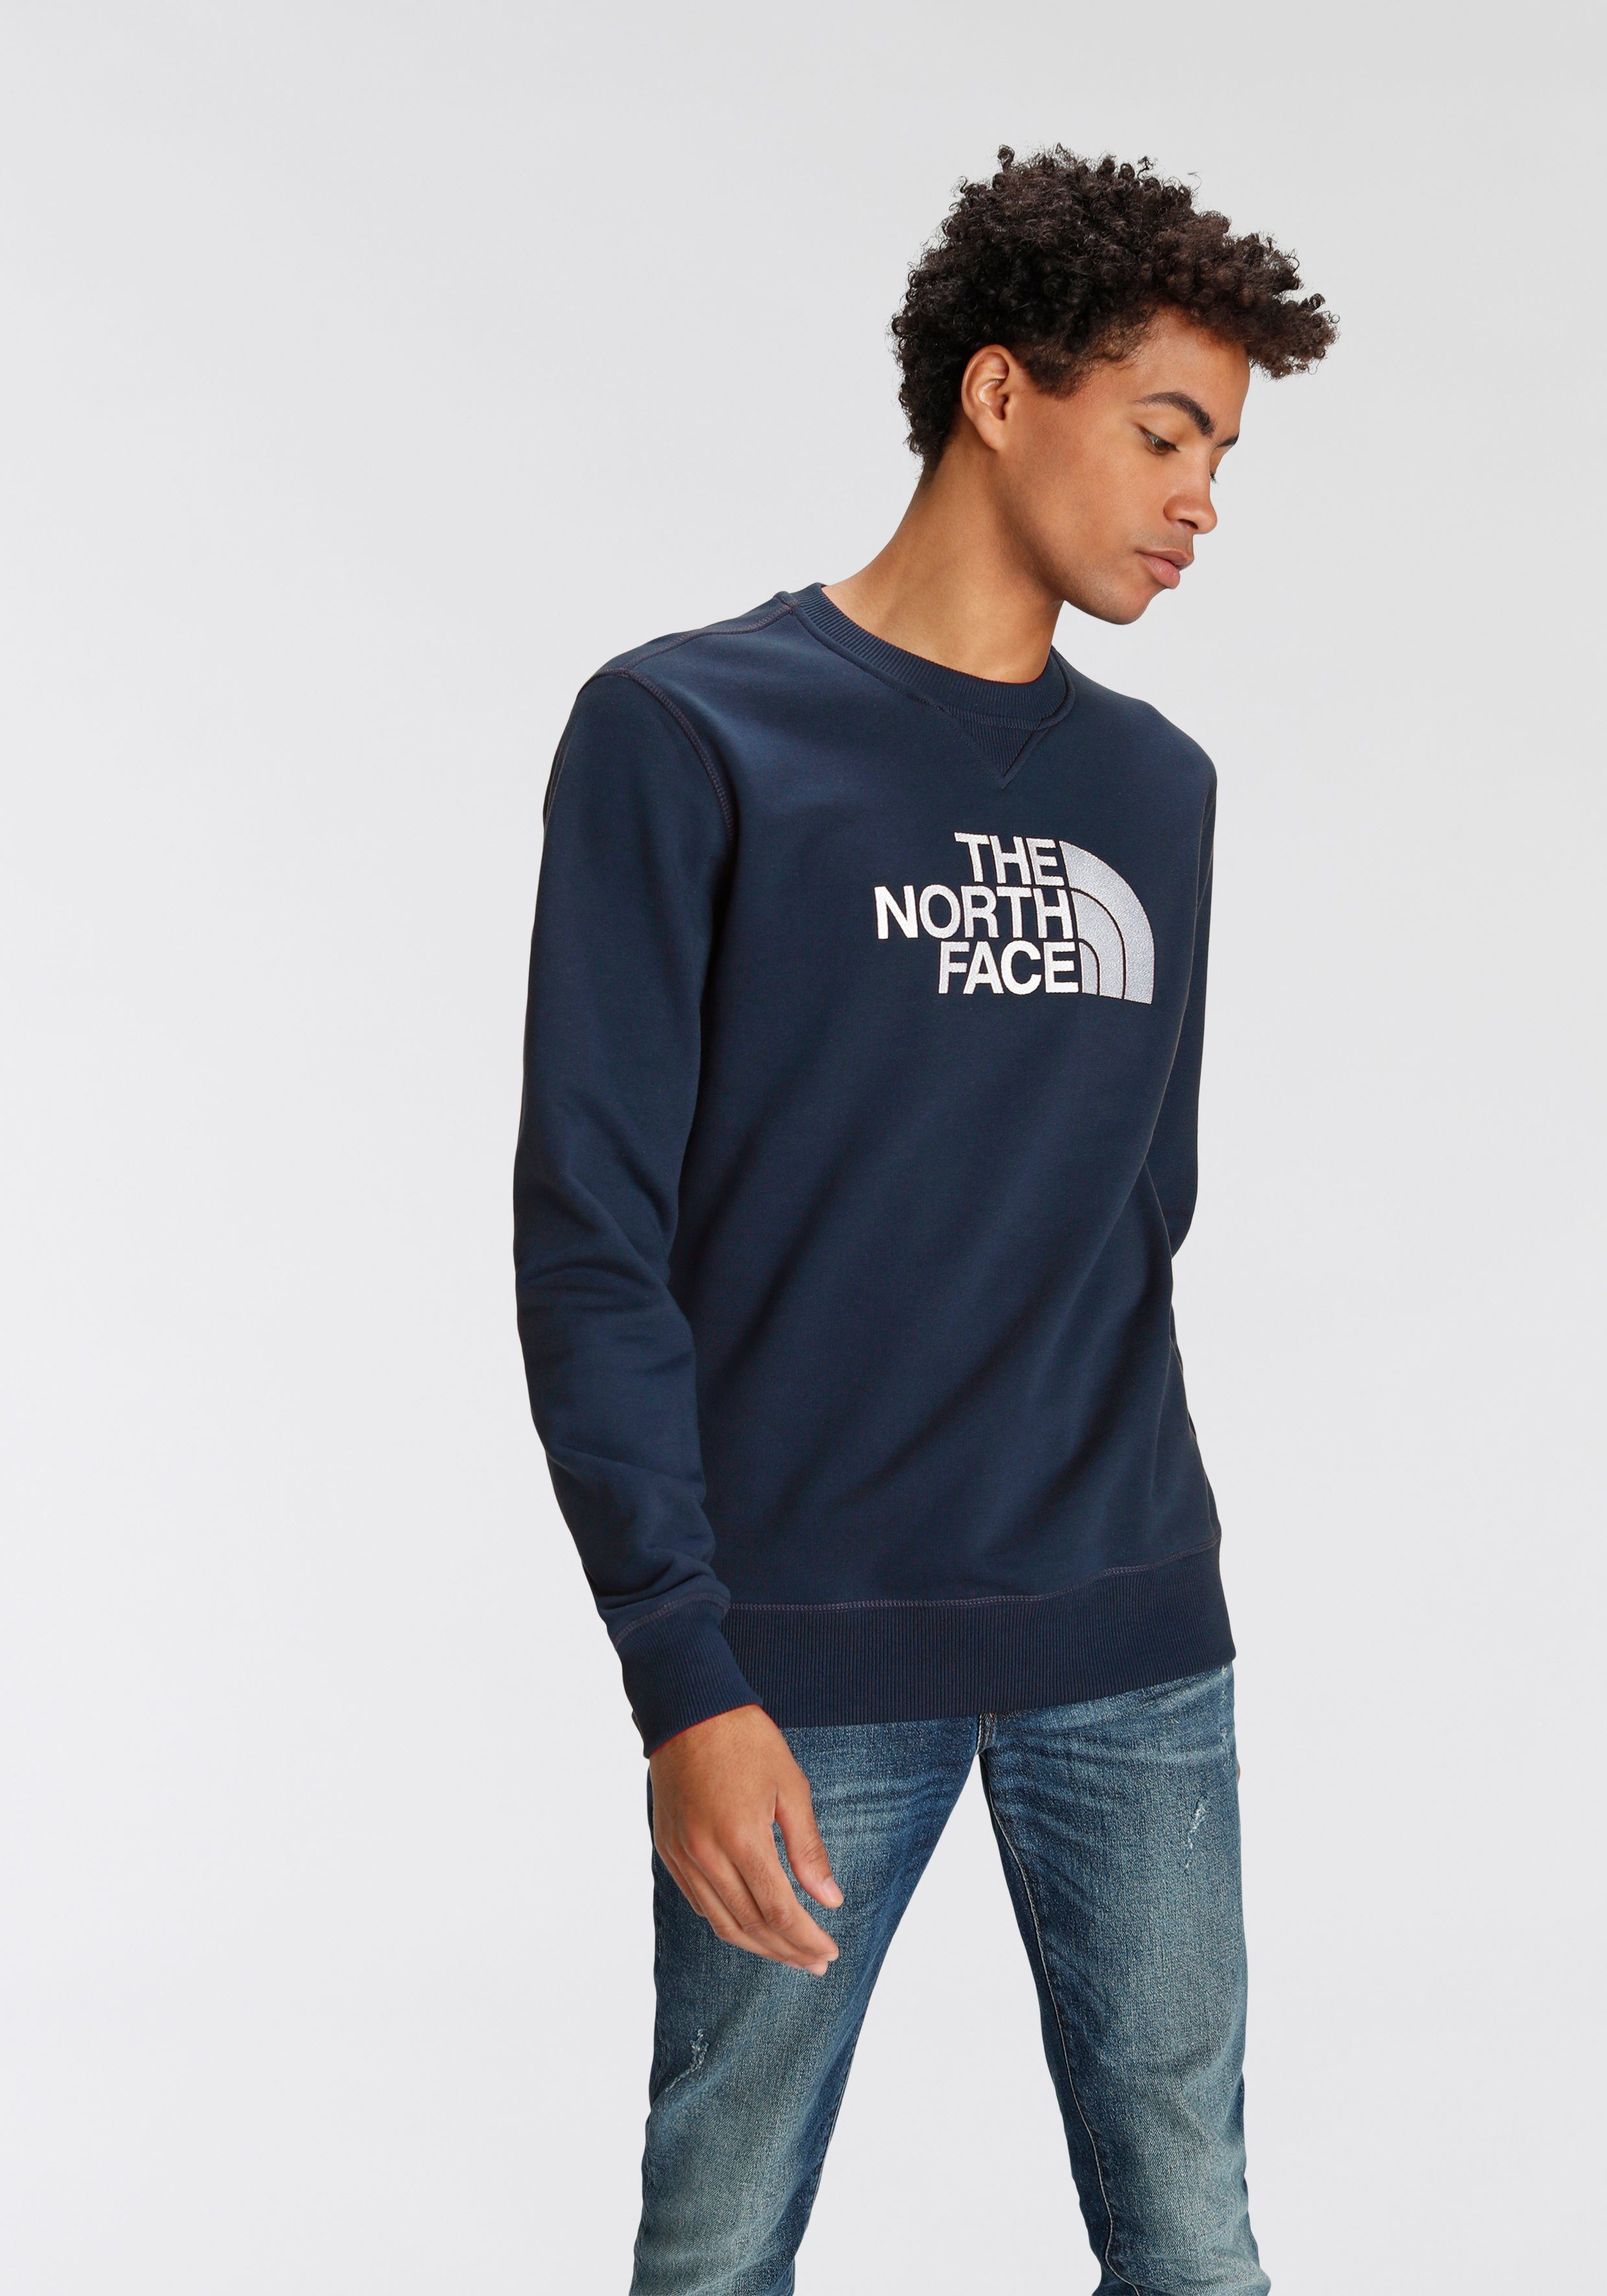 The North Face Sweatshirt DREW PEAK marine